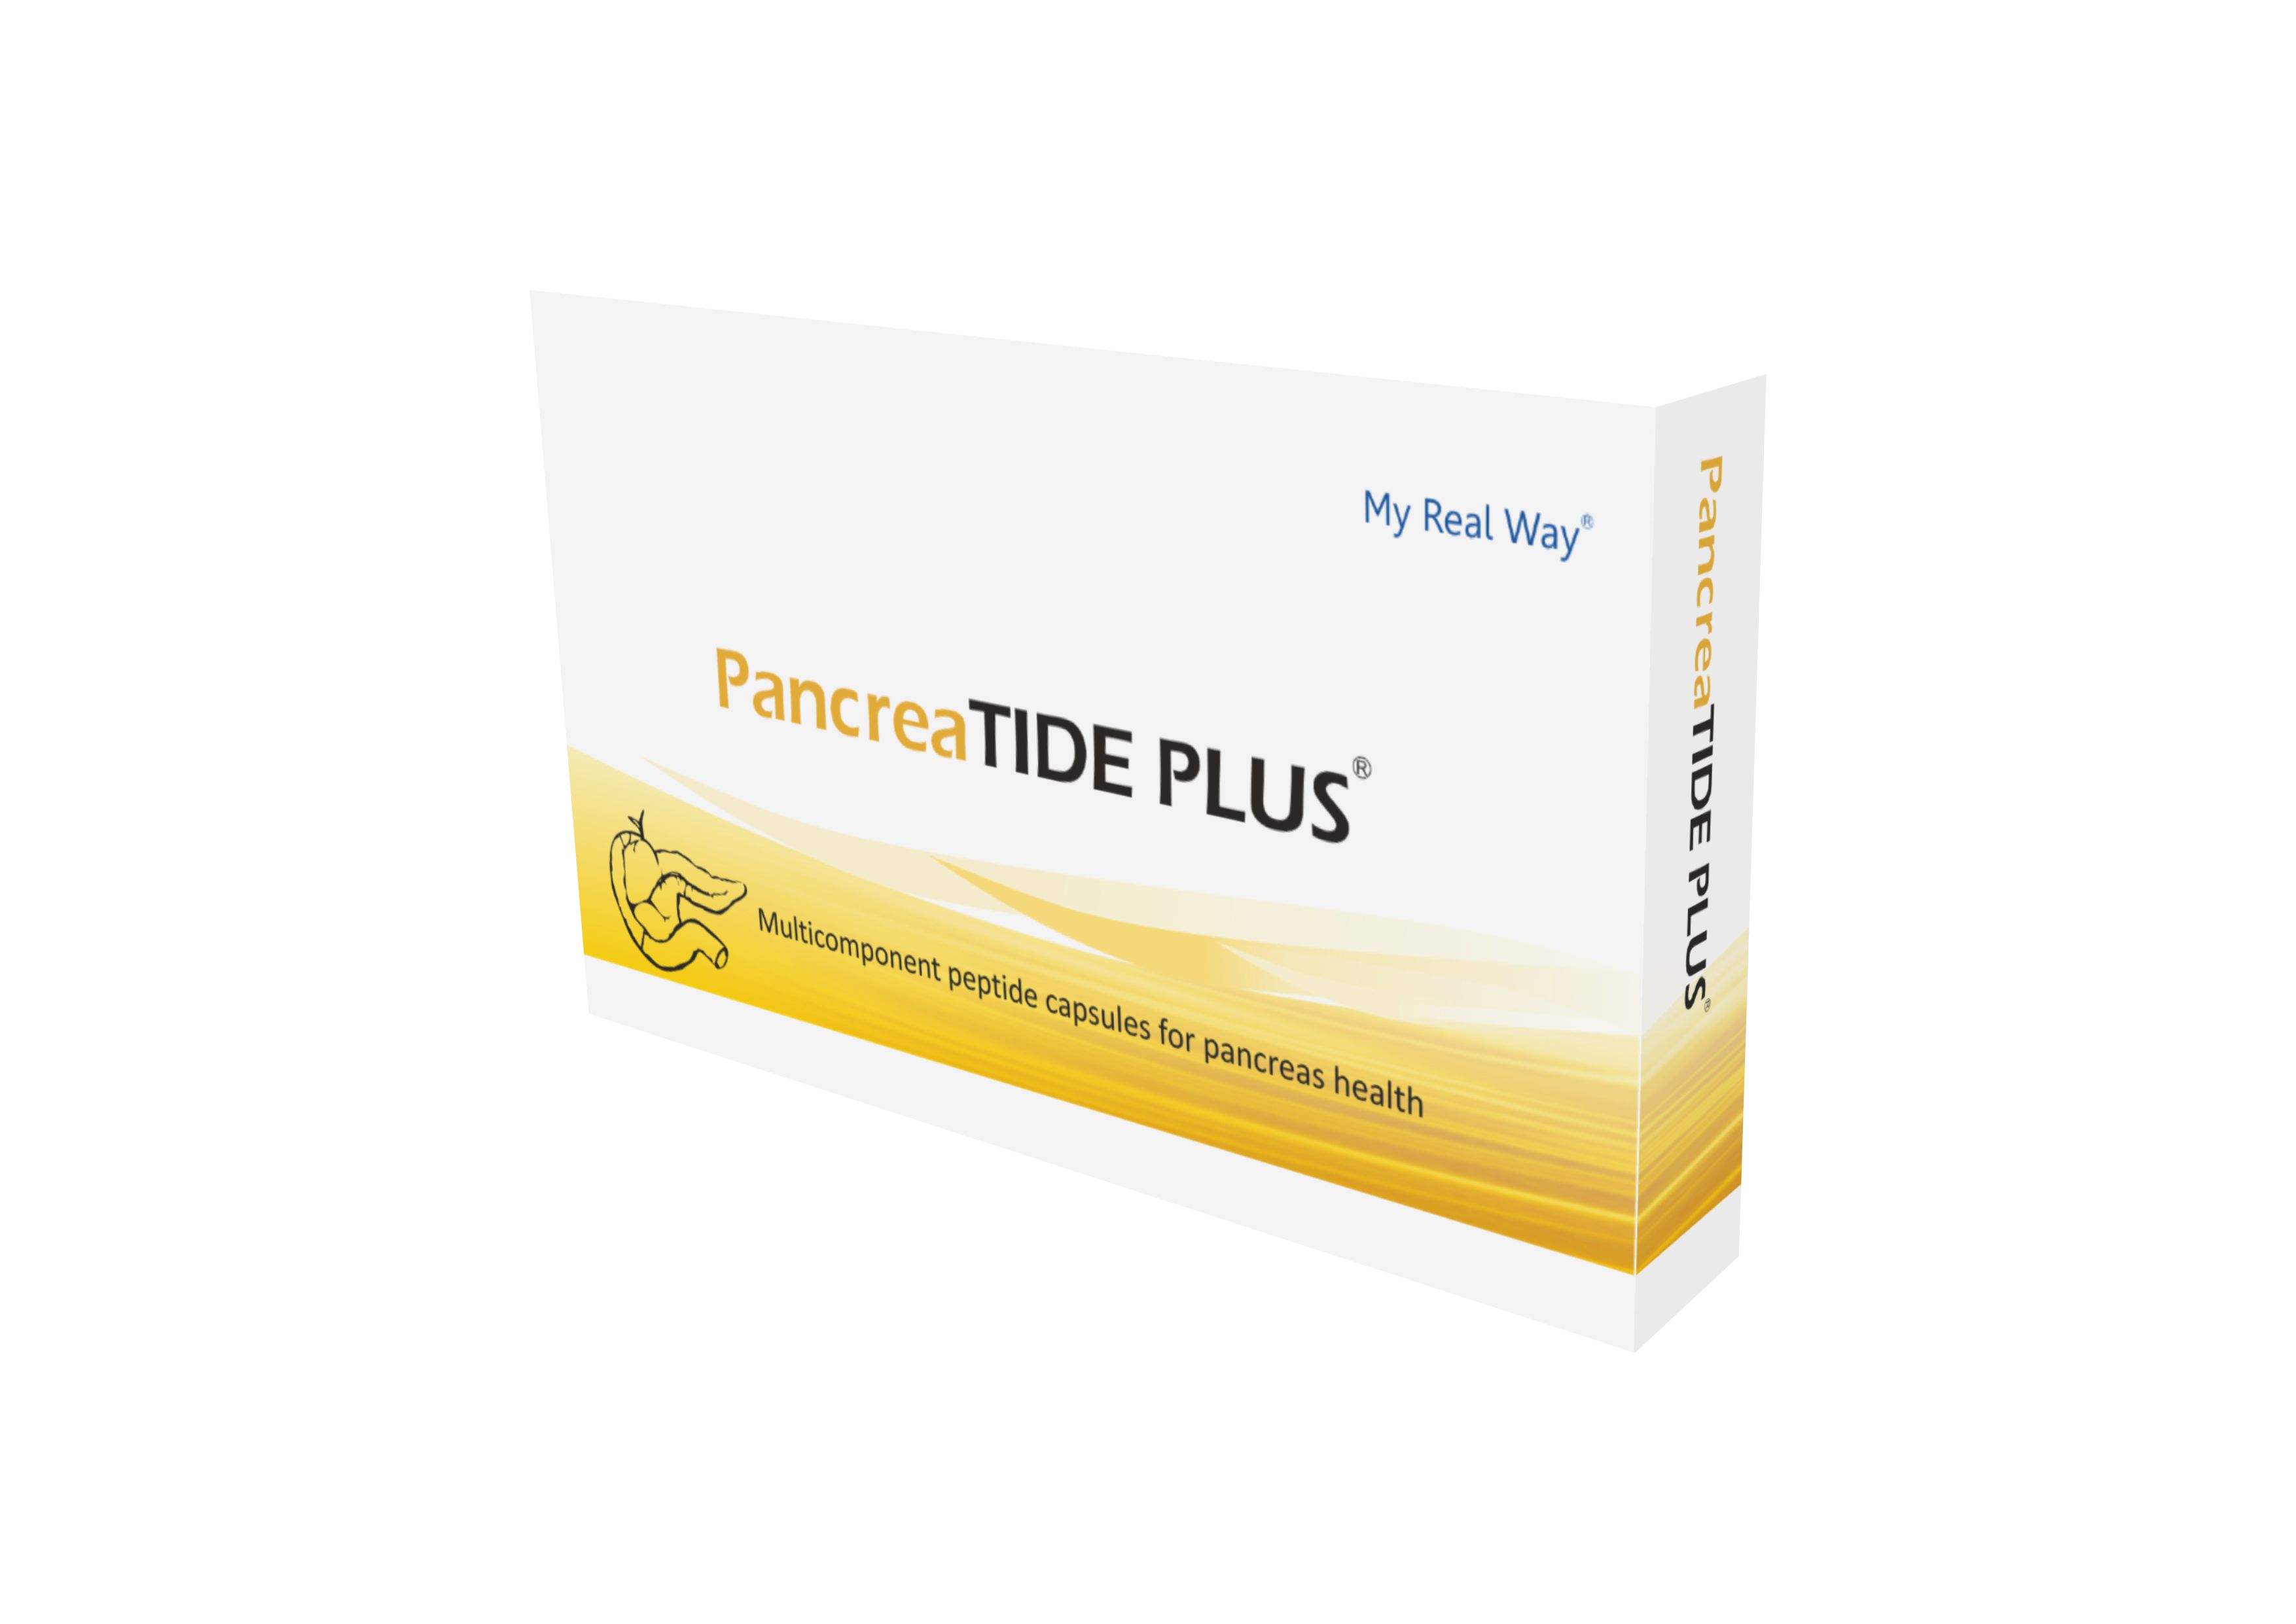 PancreaTIDE PLUS peptides for the pancreas